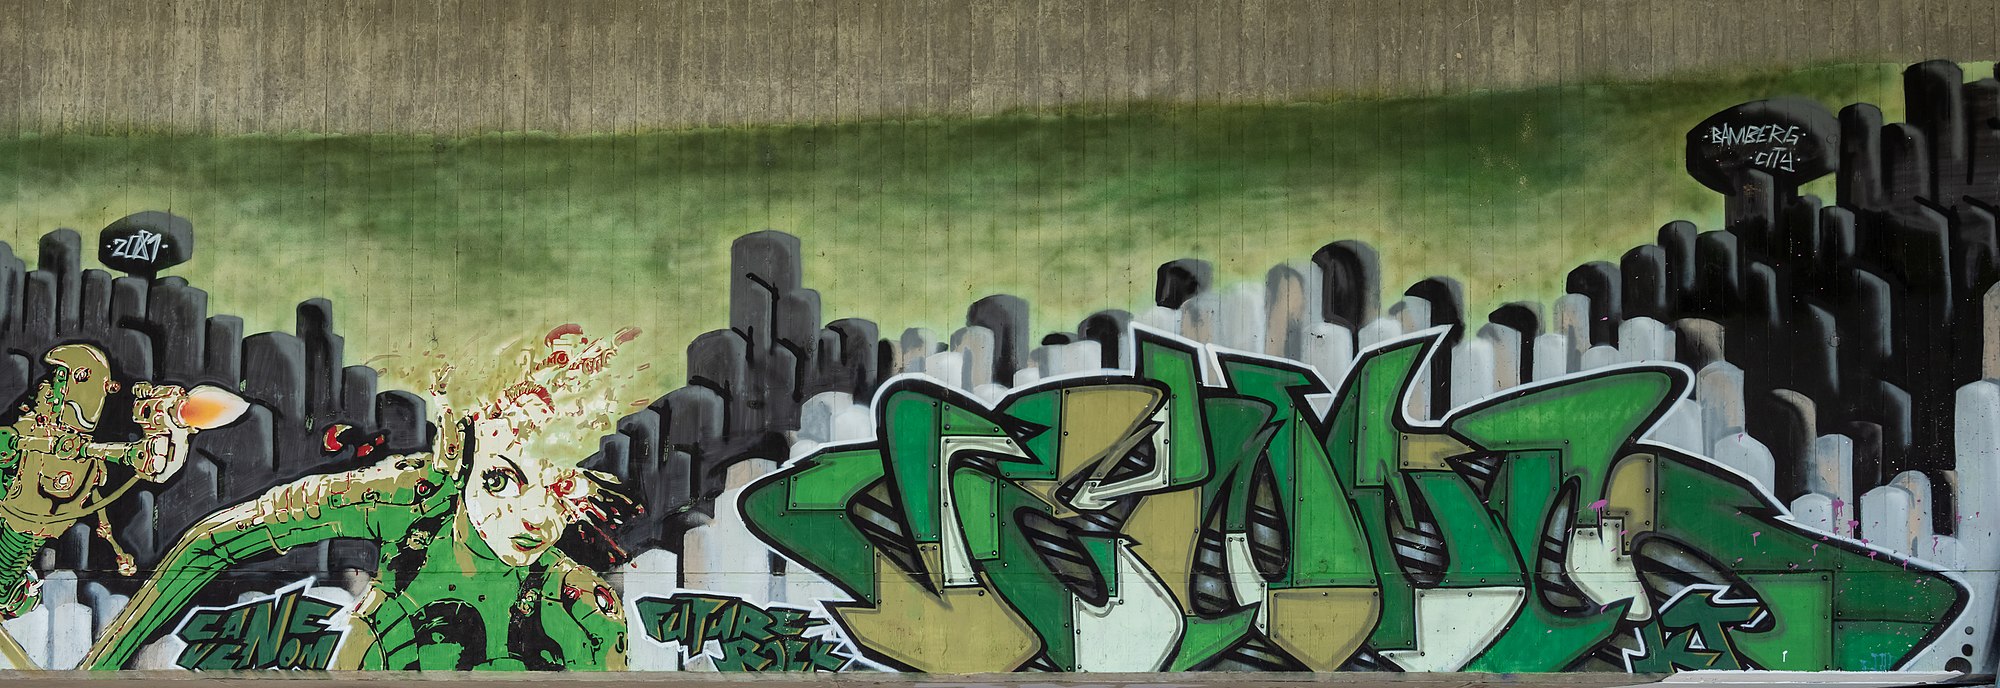 File:Bamberg Graffiti-20200417-RM-150445.jpg